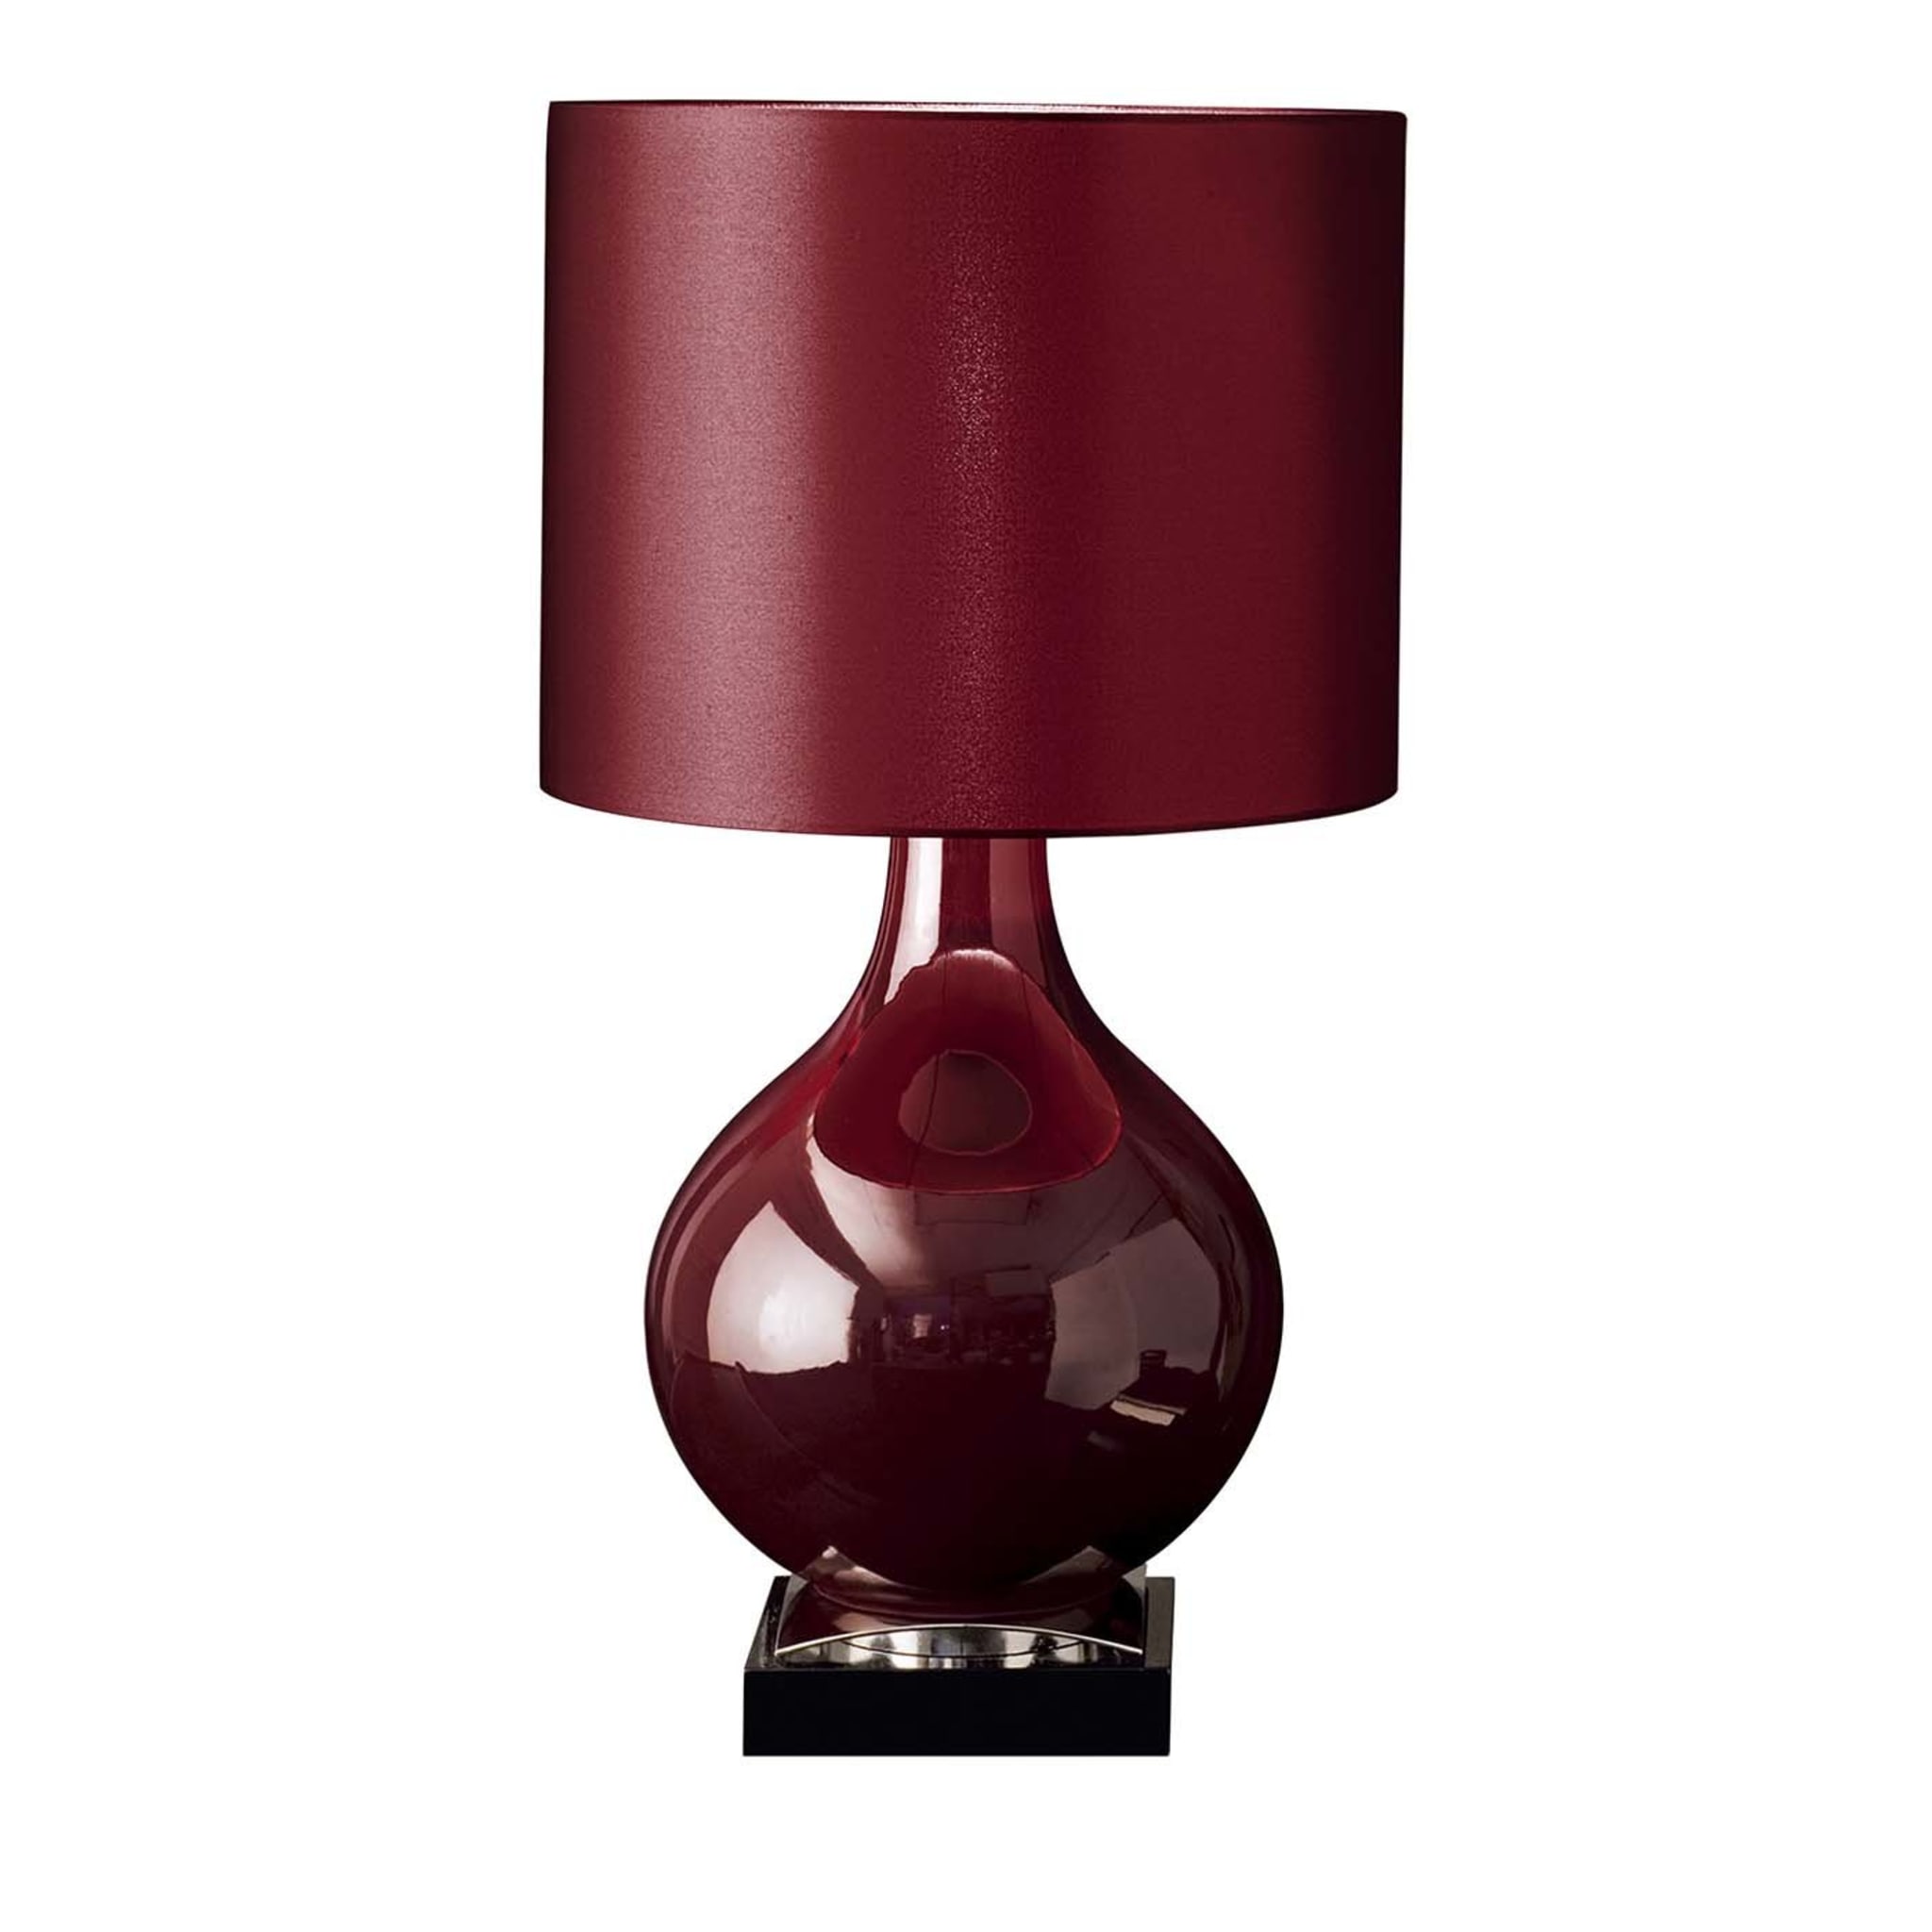 CL1876 Lampada a vaso in maiolica rossa e seta - Vista principale